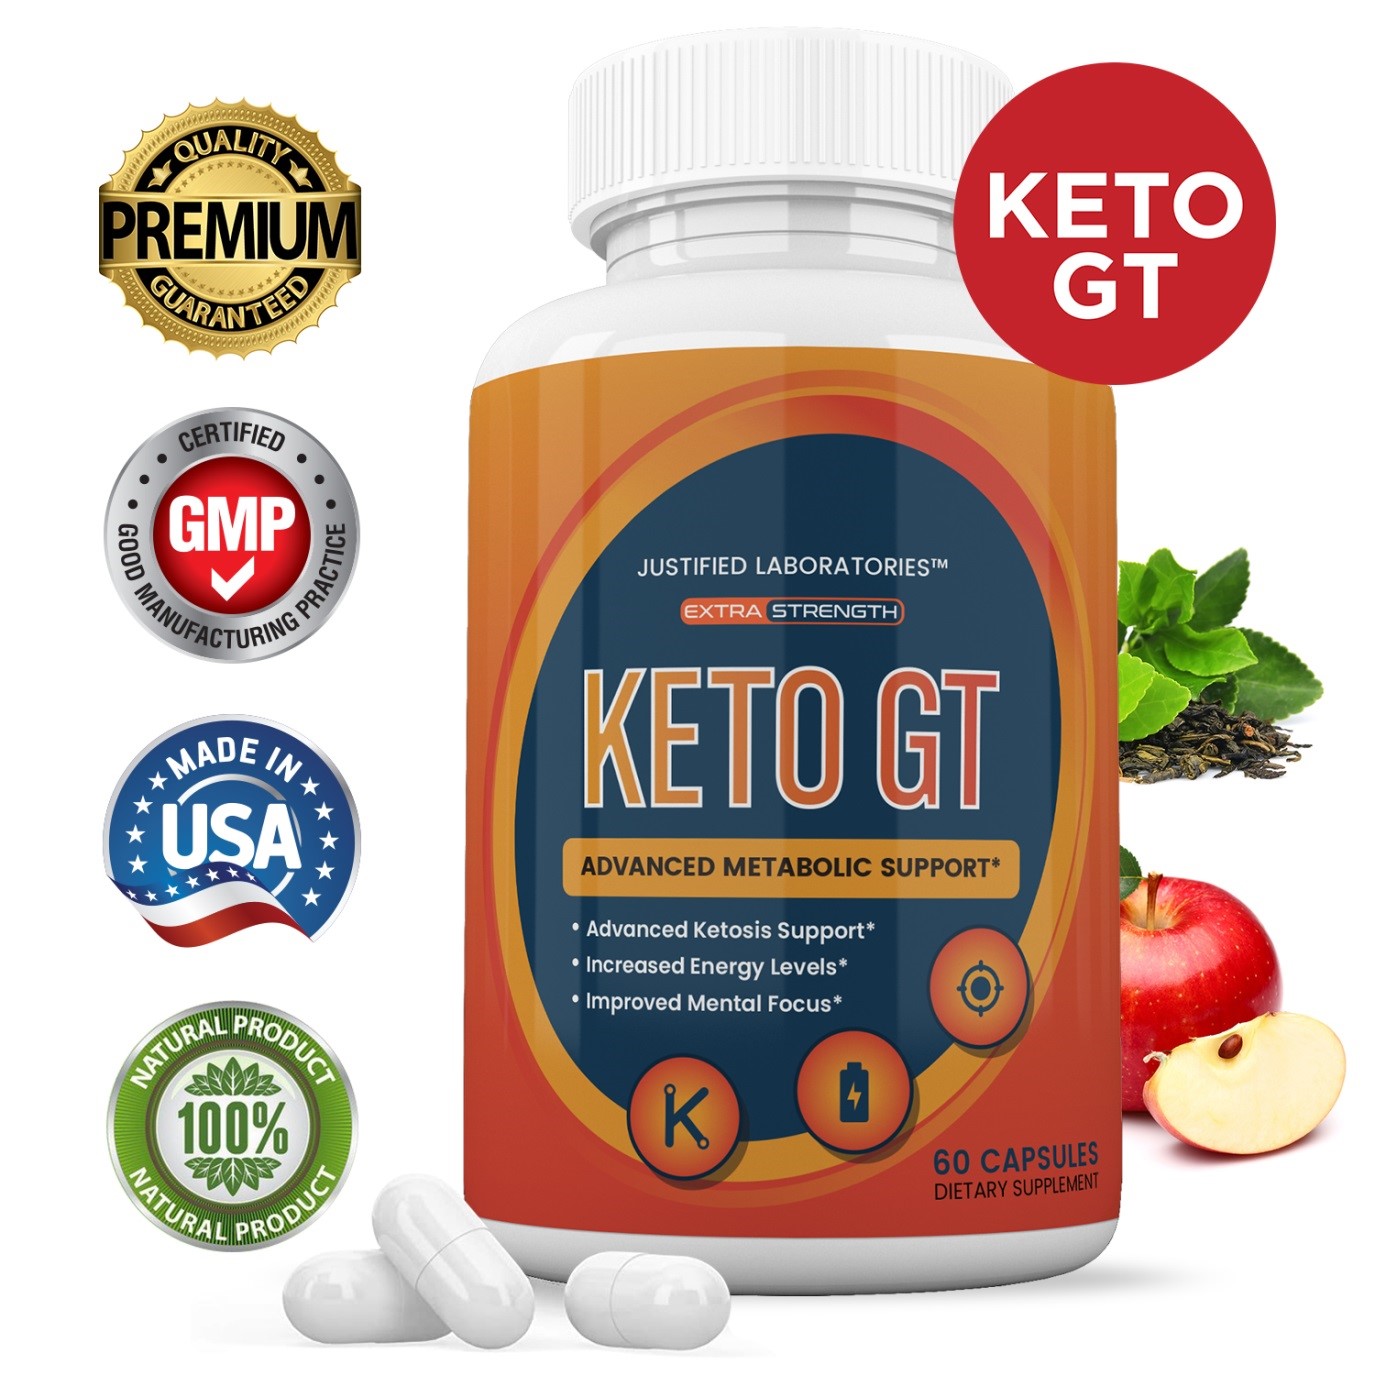 Keto GT Review